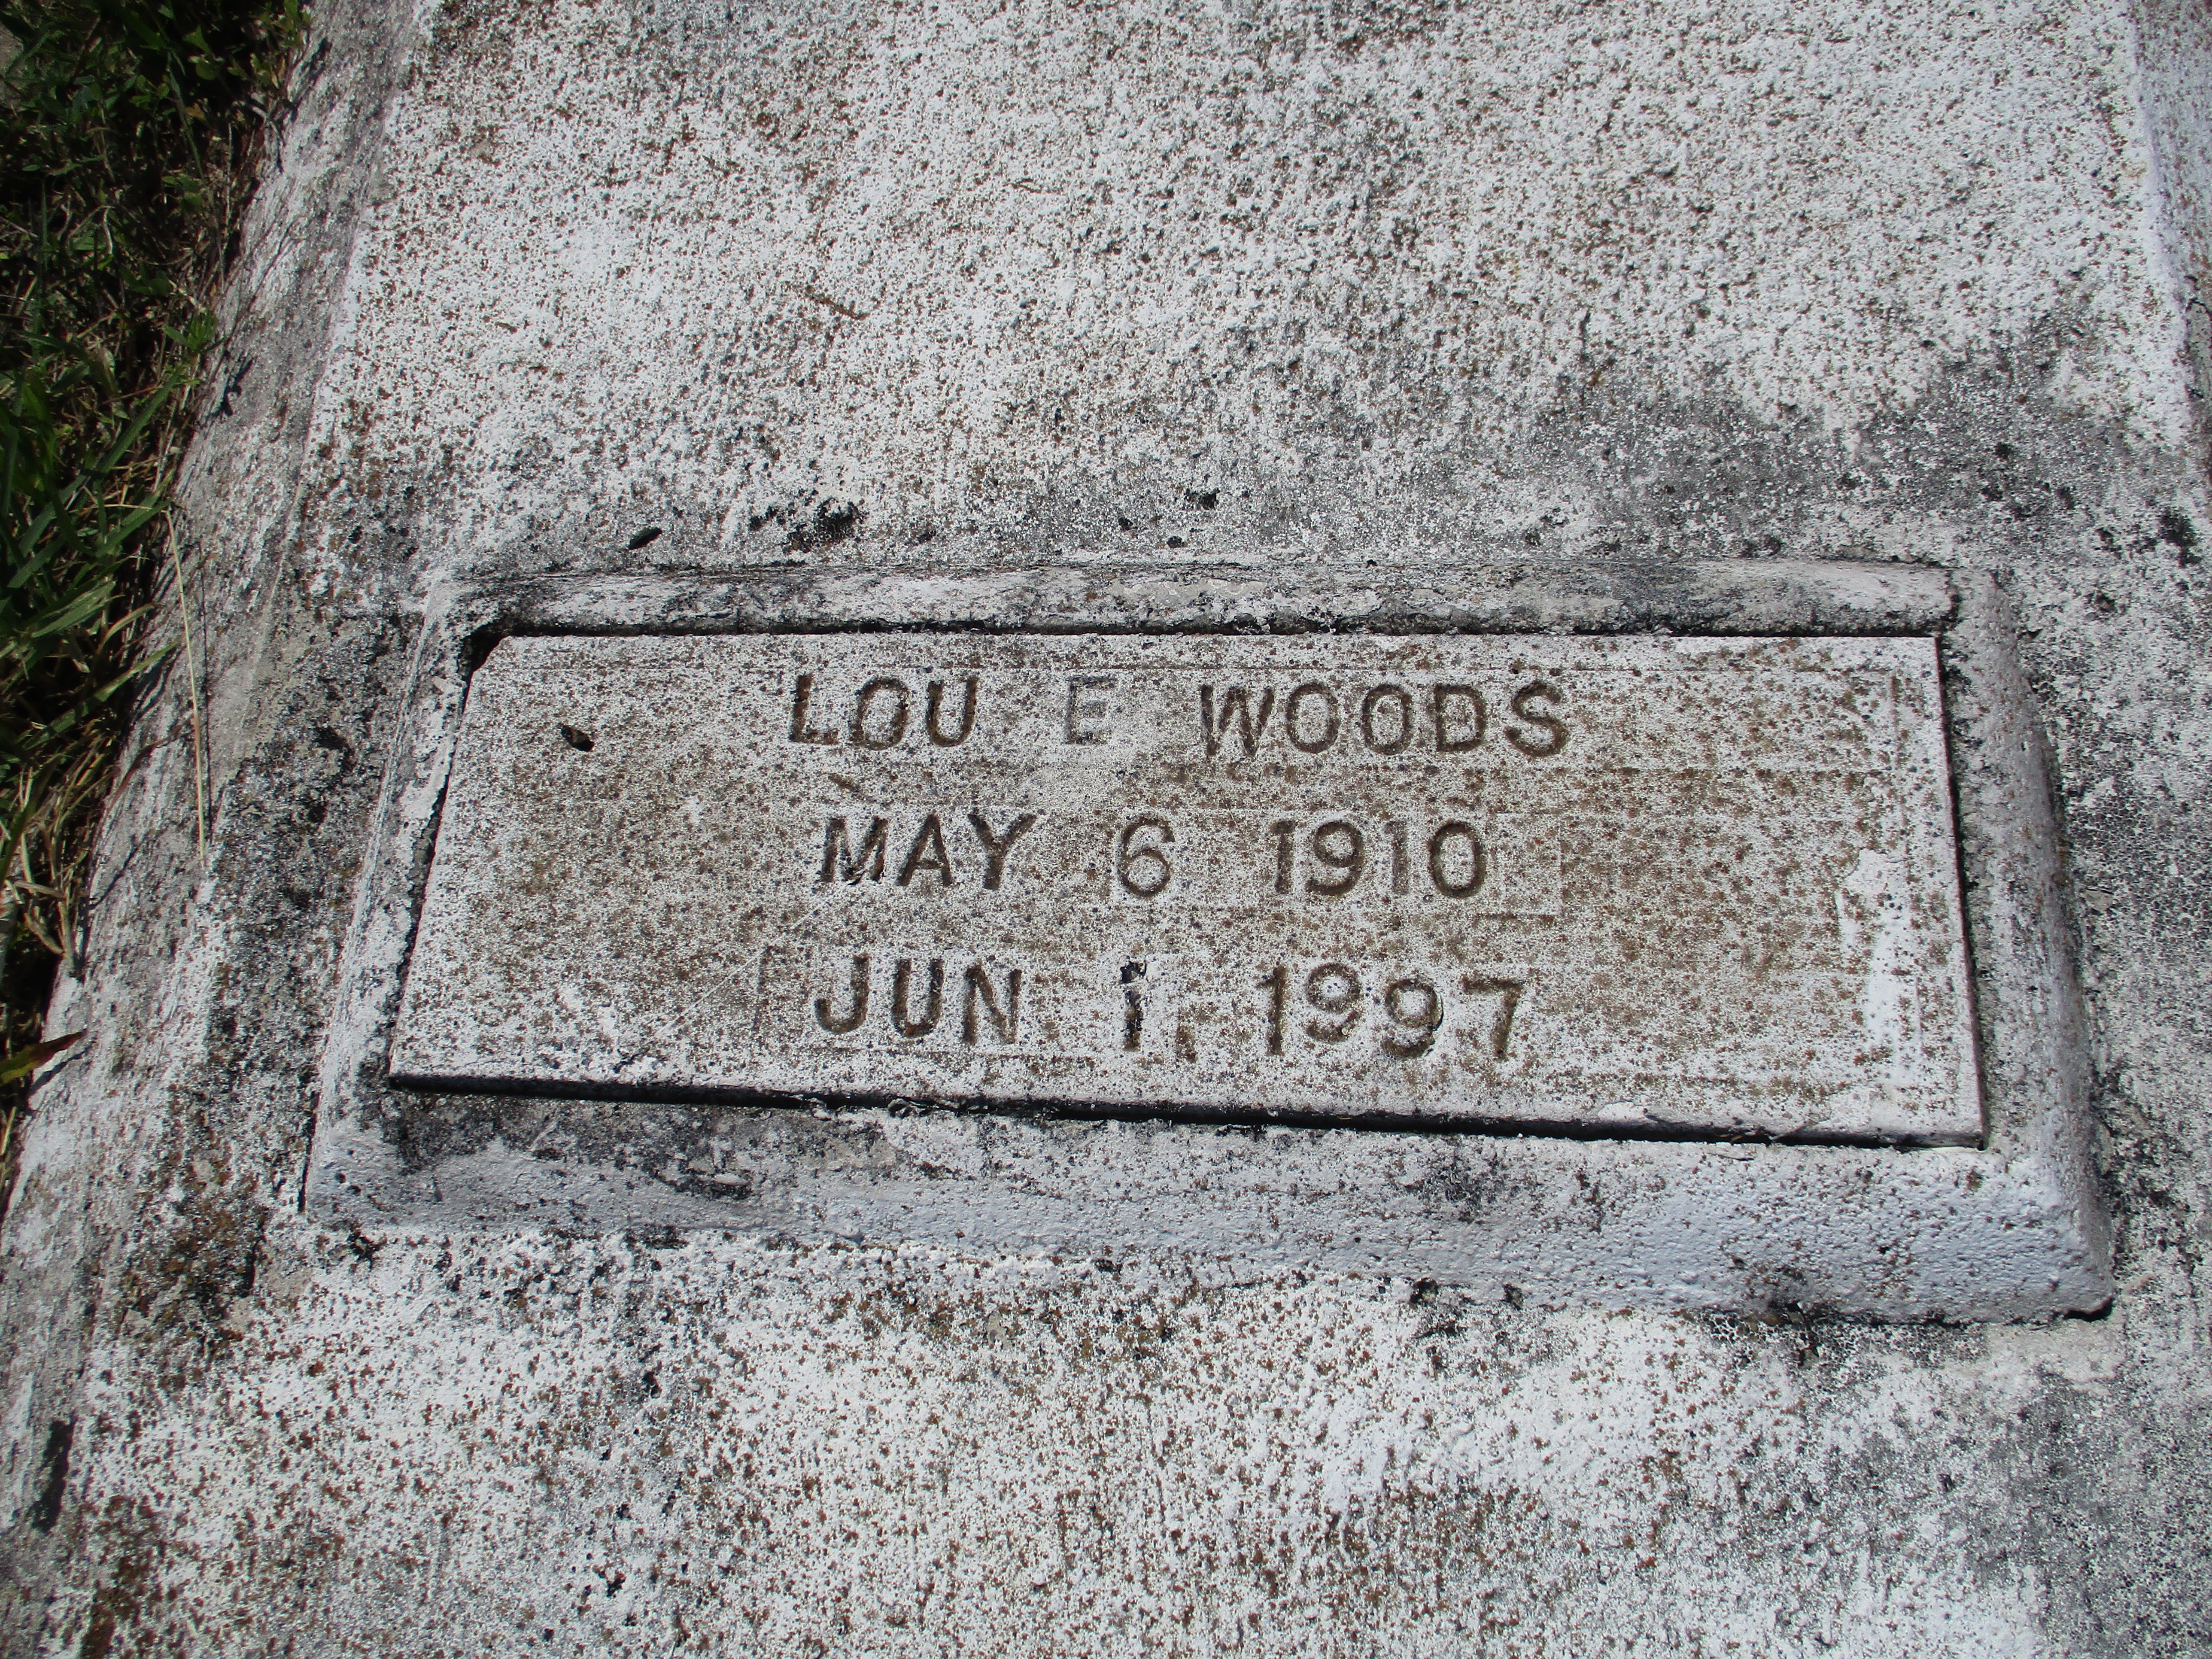 Lou E Woods